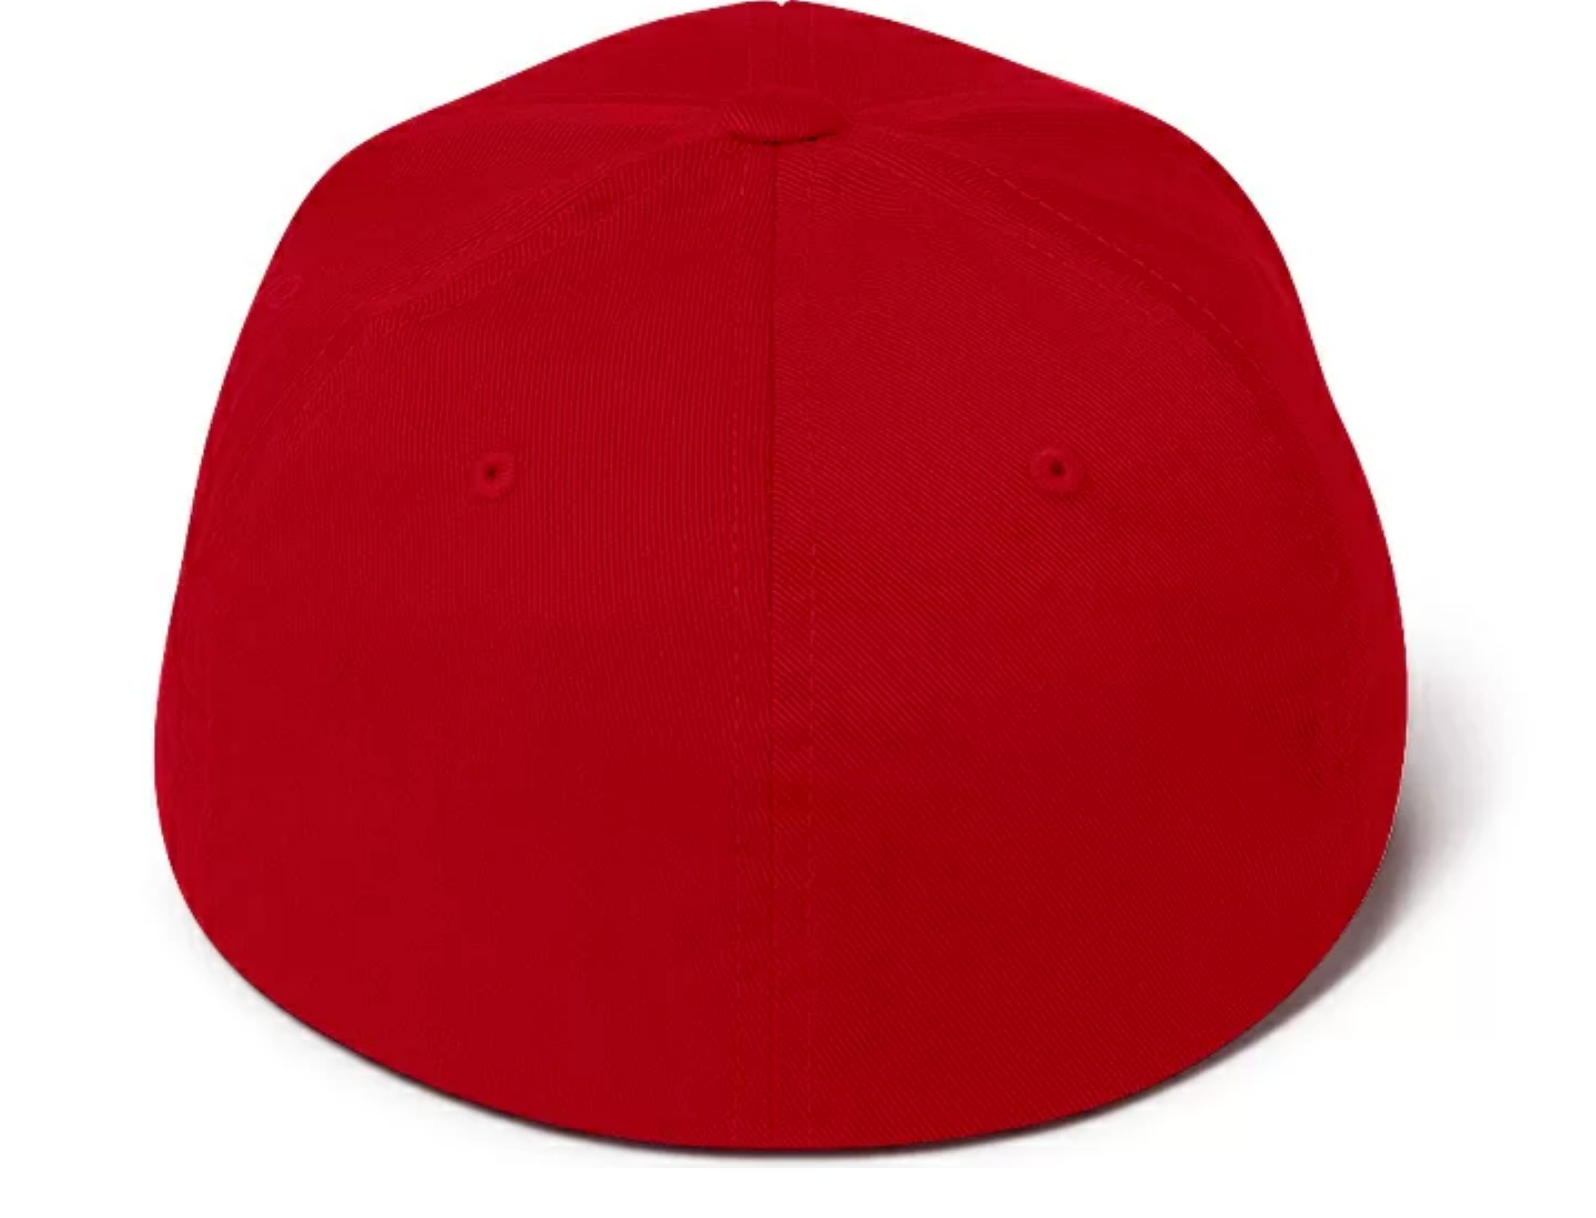 niki lauda red cap for sale